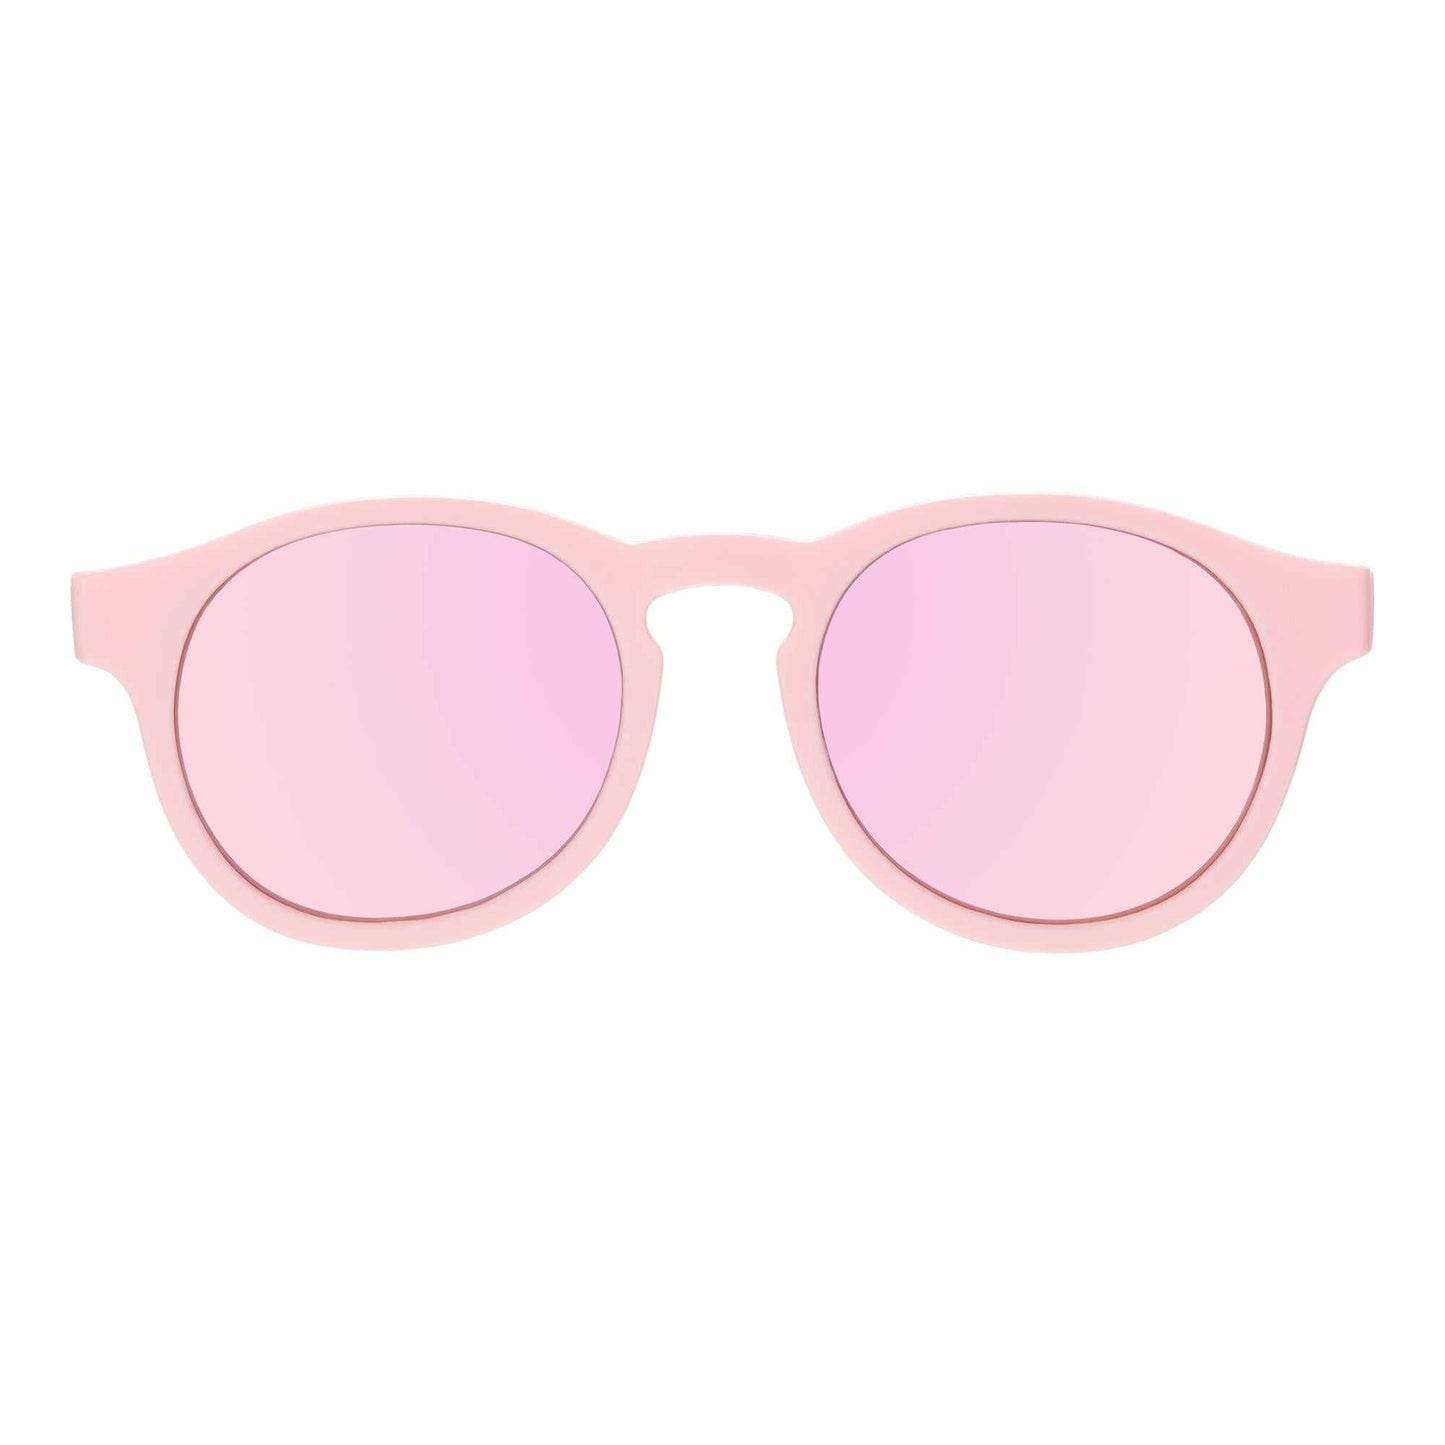 Keyhole non-polarized Sunglasses "The Darling"